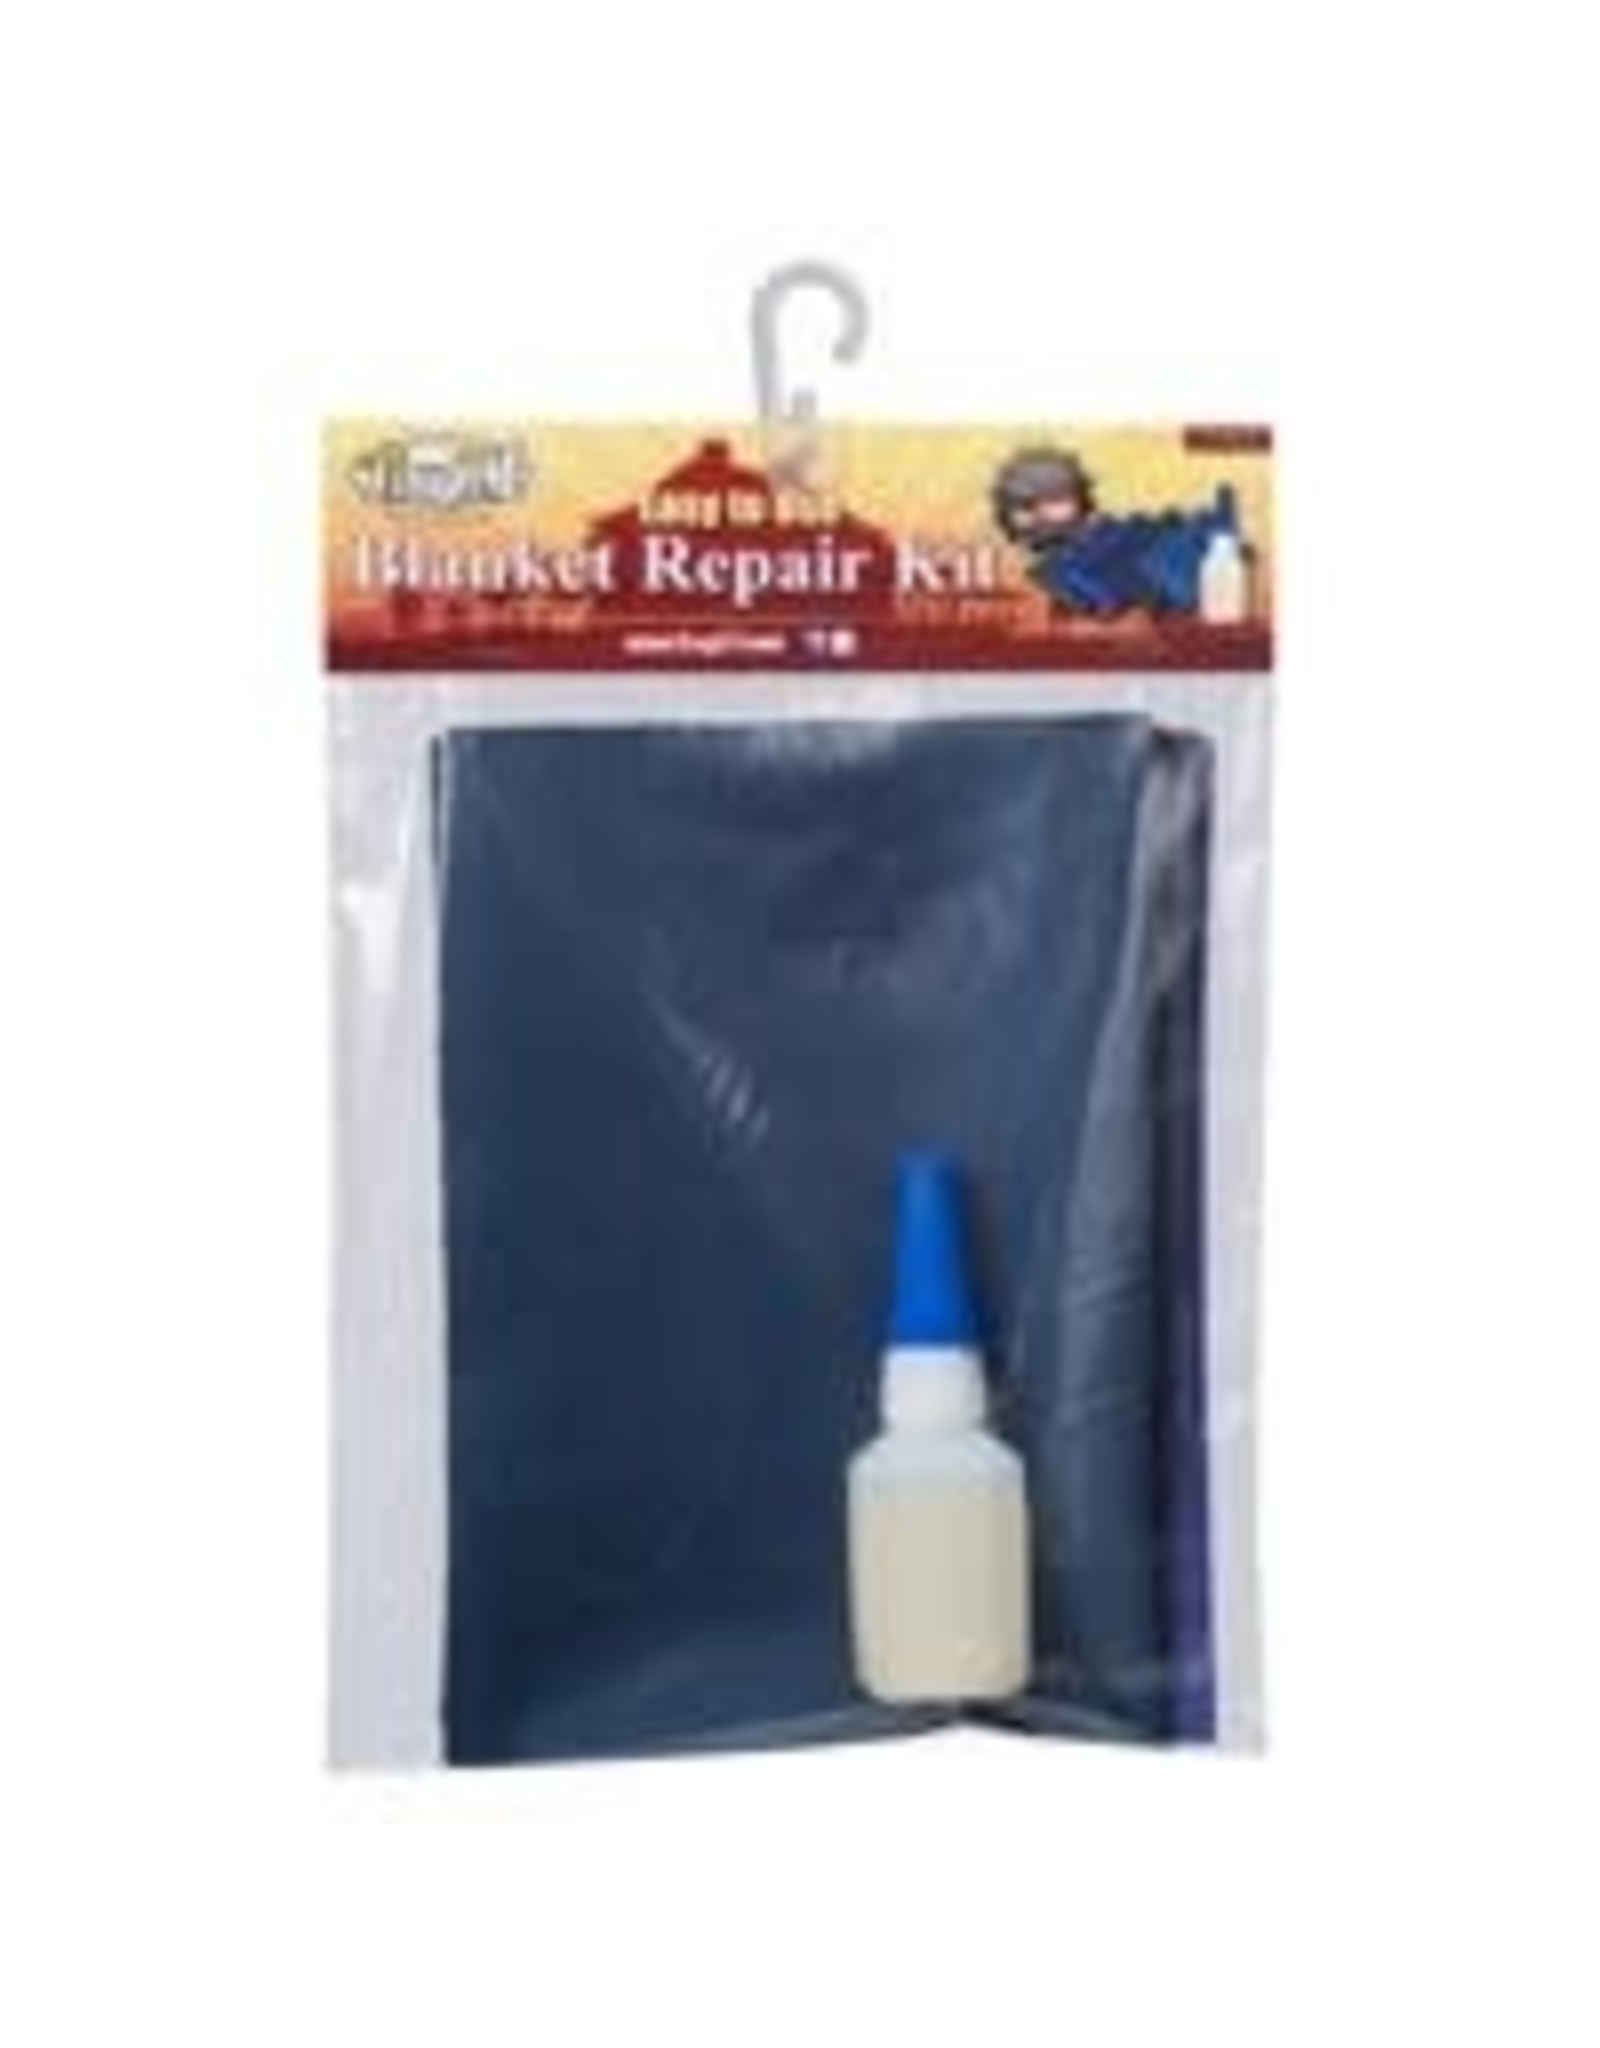 Horse Blanket /Sheet Repair Kit 72-03234